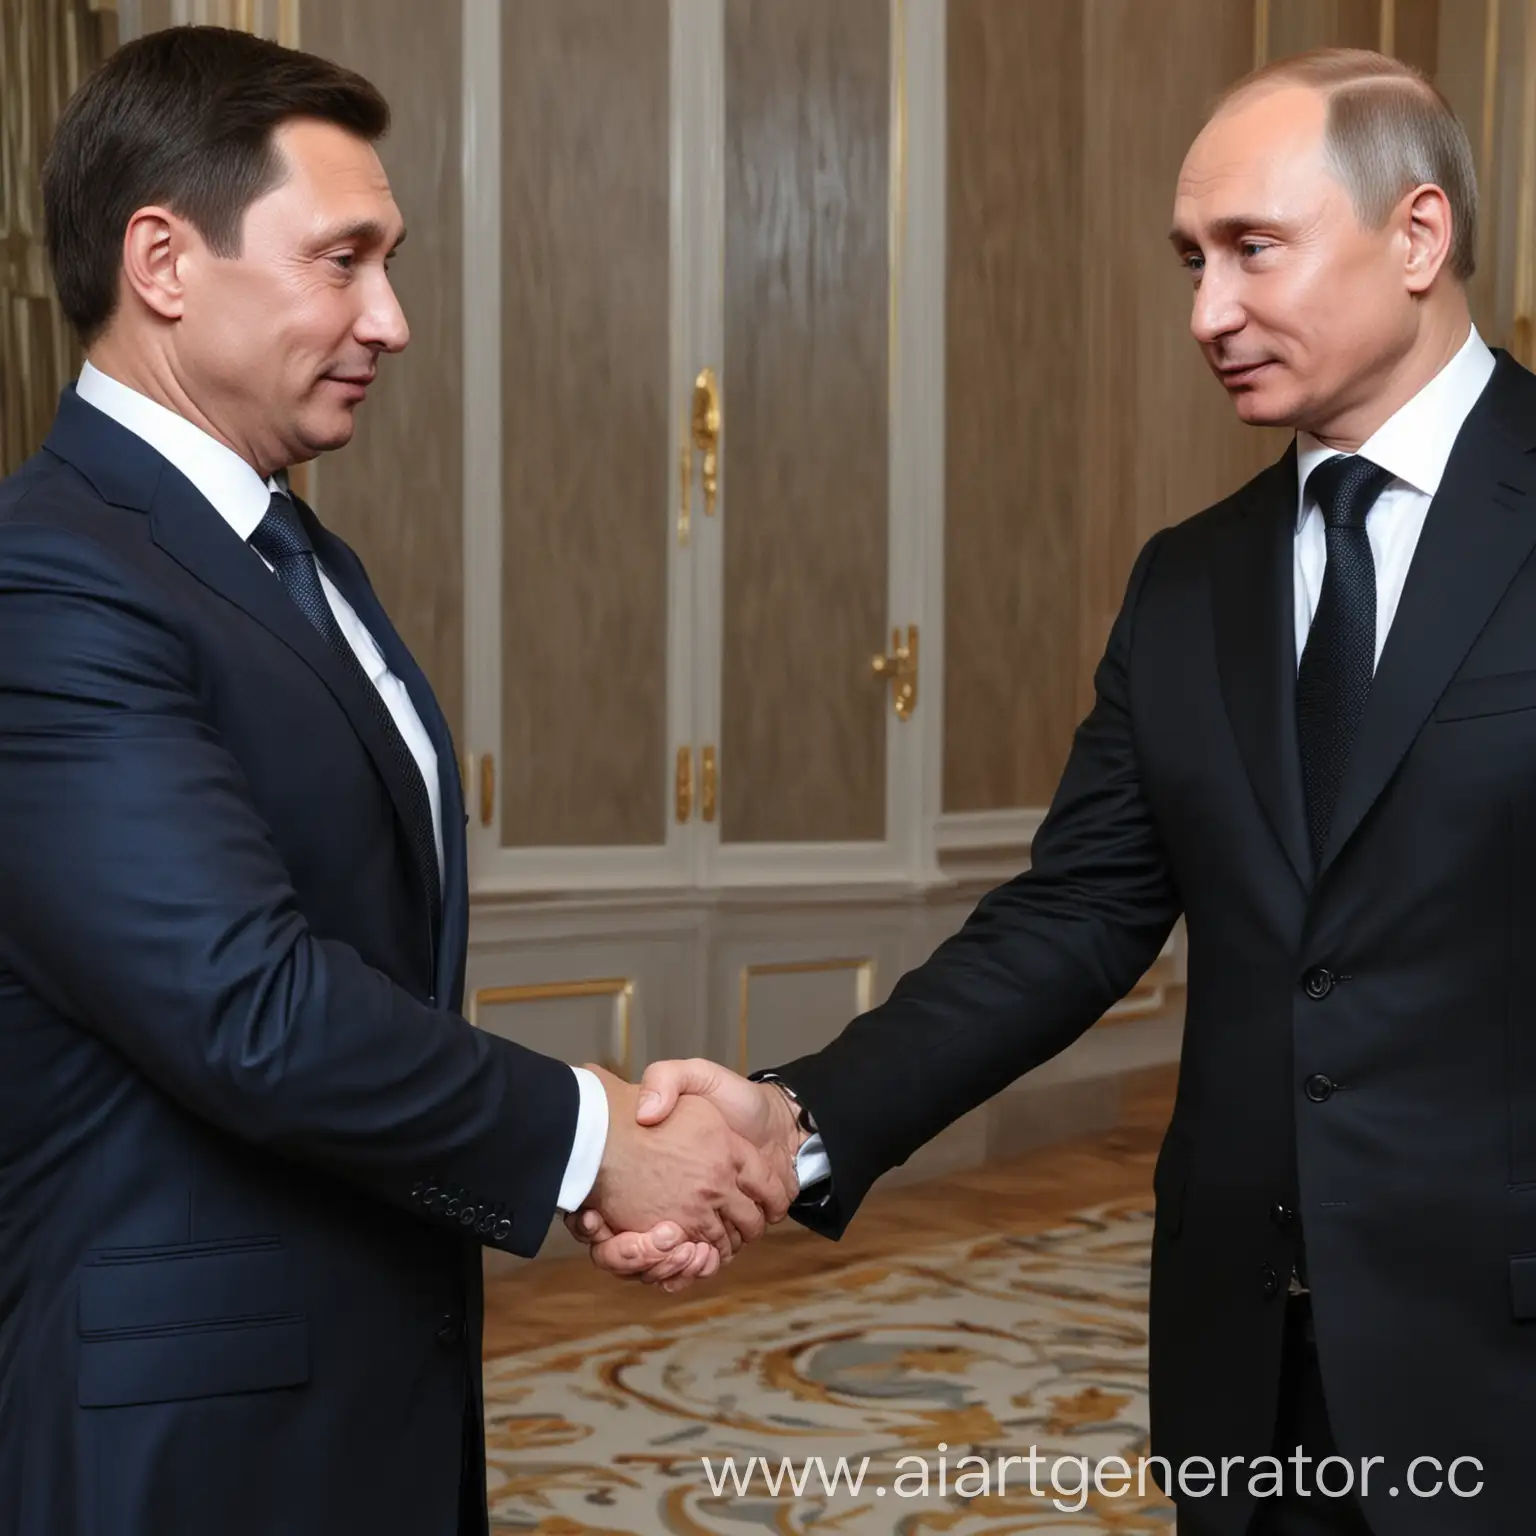 Putin-Shaking-Hands-with-Zelensky-Diplomatic-Encounter-between-Russian-and-Ukrainian-Leaders